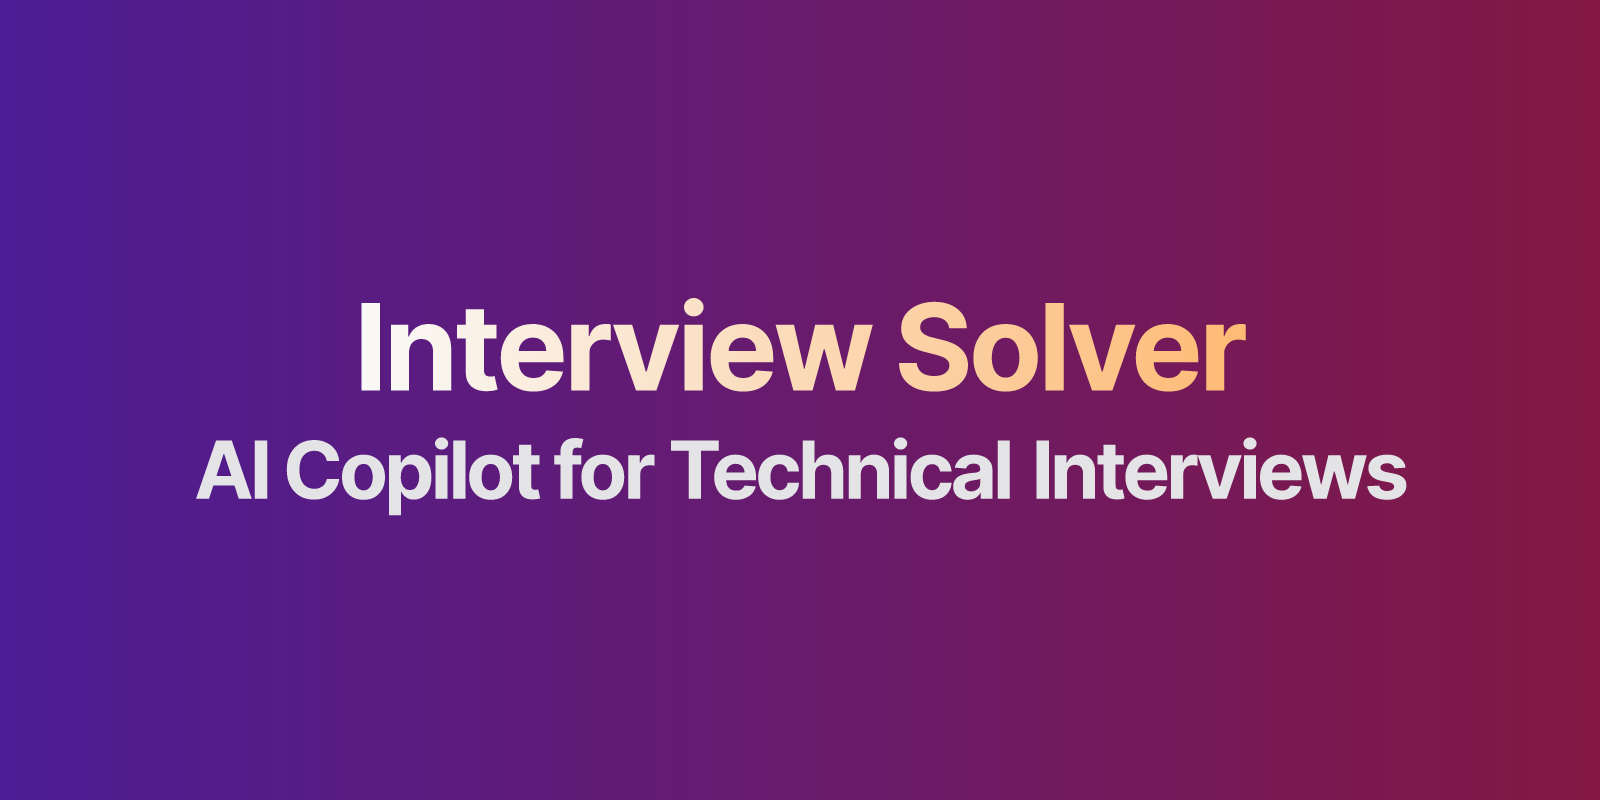 (c) Interviewsolver.com